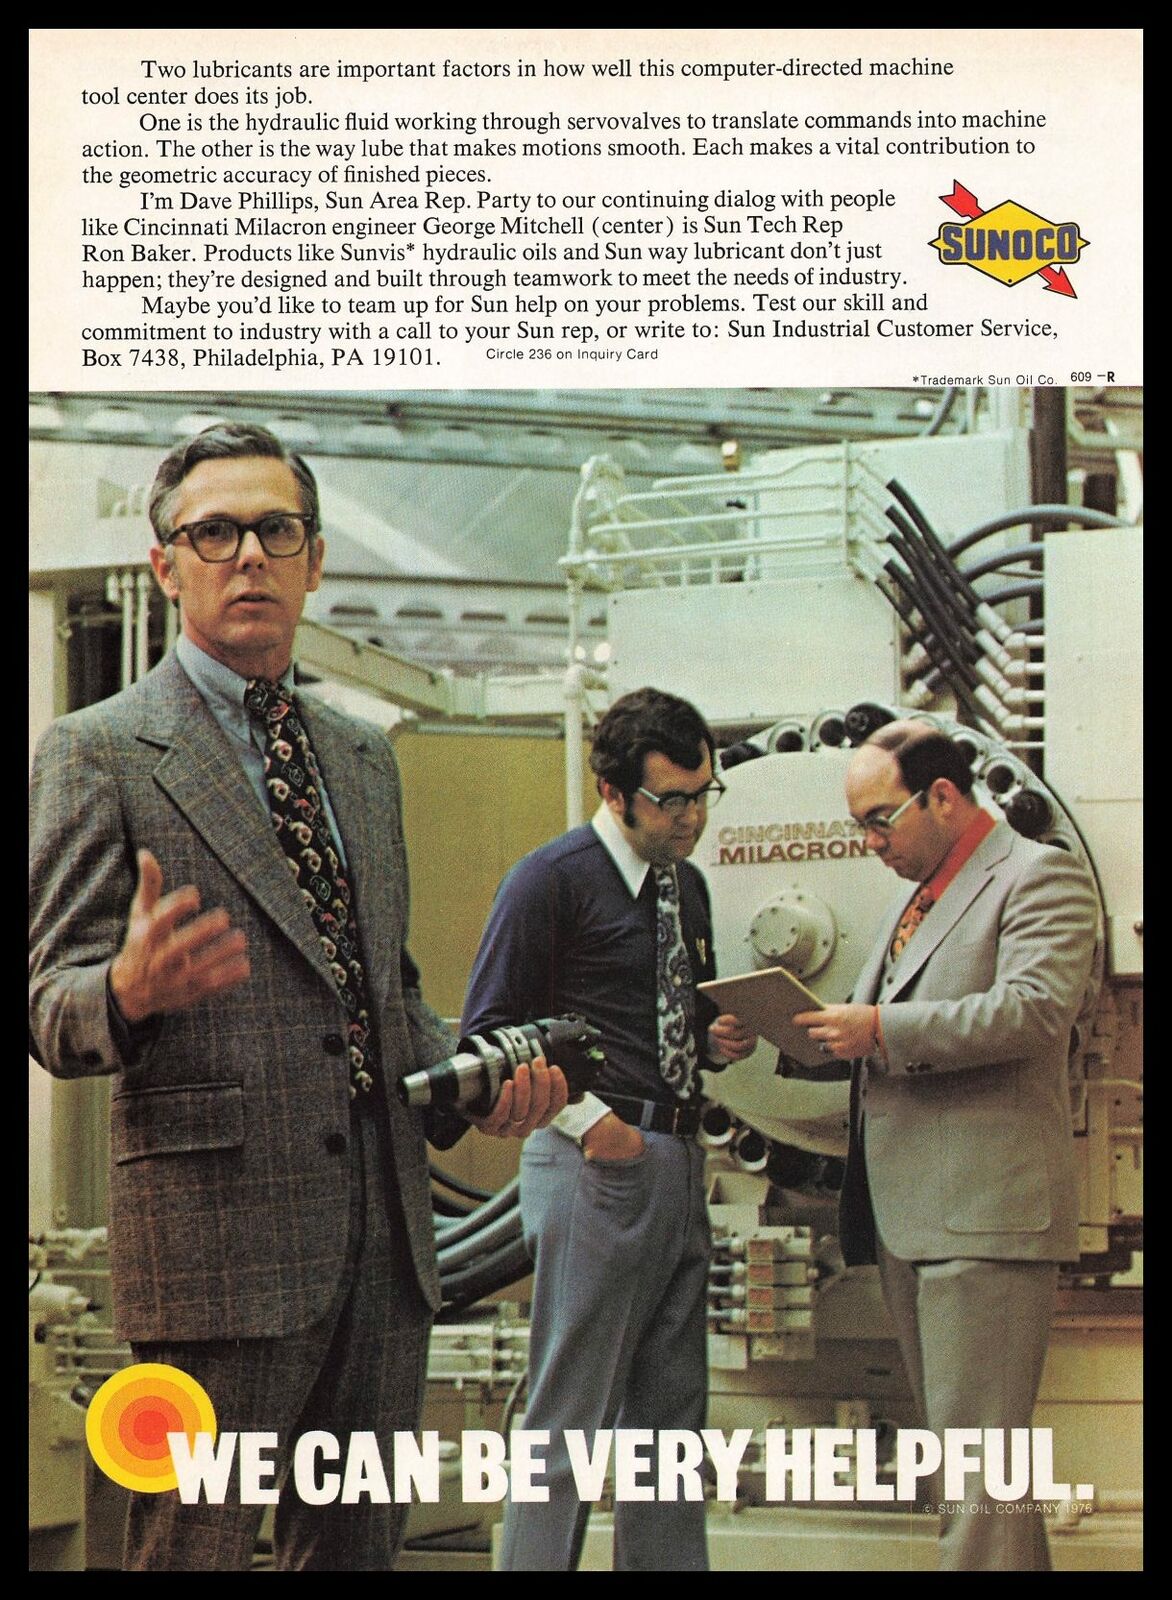 1976 SUNOCO Dave Phillips Cincinnati Milacron George Mitchell Photo Print Ad